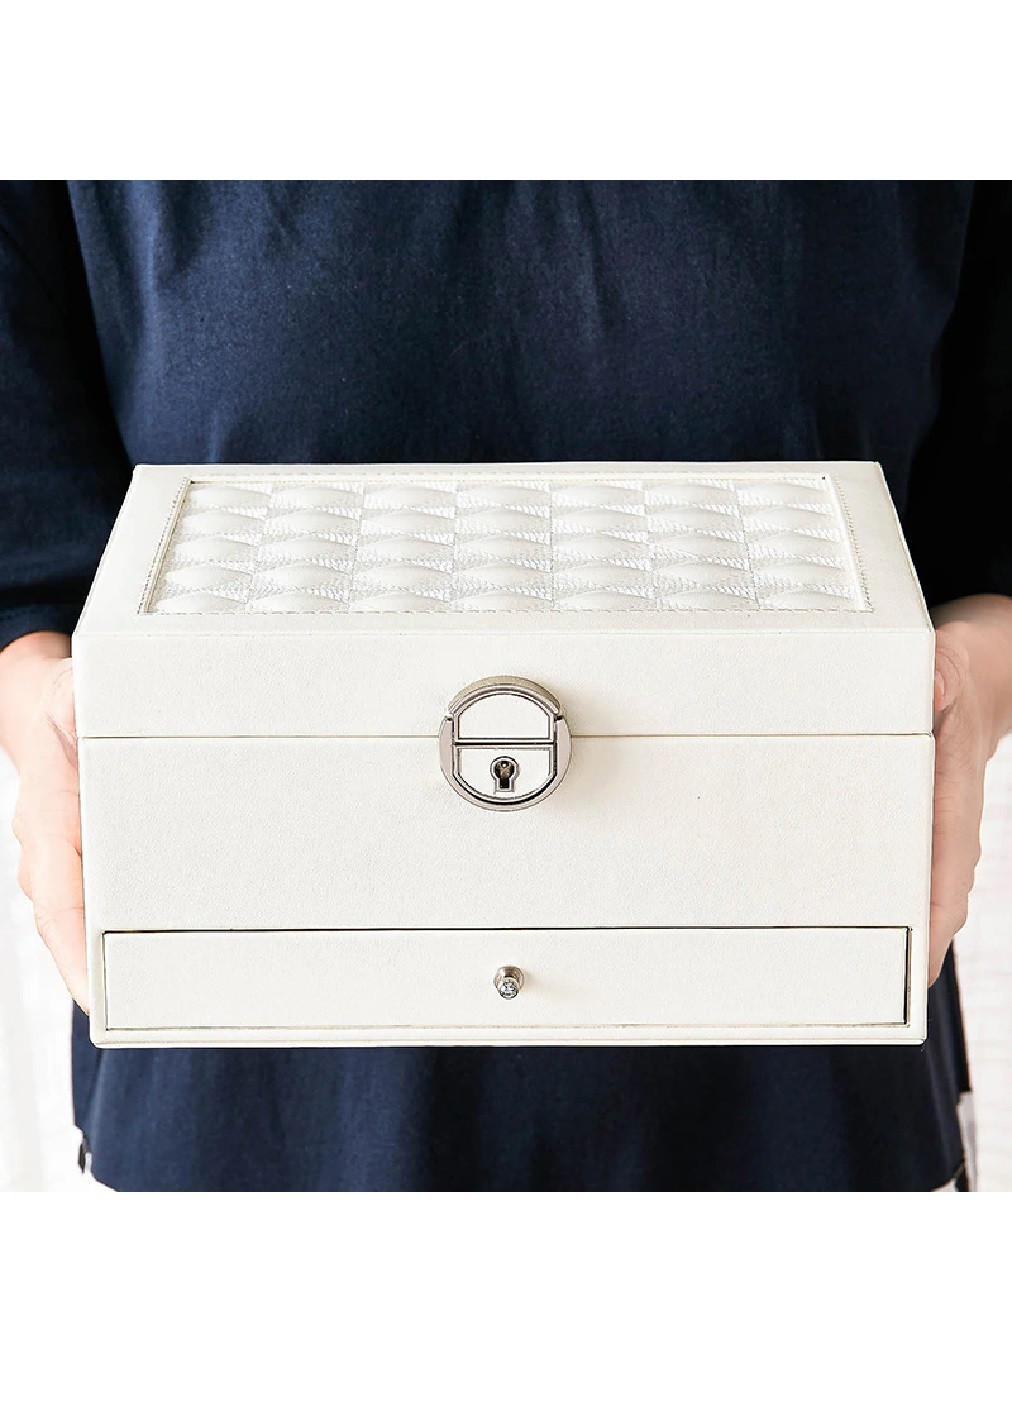 Шкатулка сундук органайзер коробка футляр для хранения украшений бижутерии эко кожа 23х17.5х12 см (474624-Prob) Белая Unbranded (259137775)